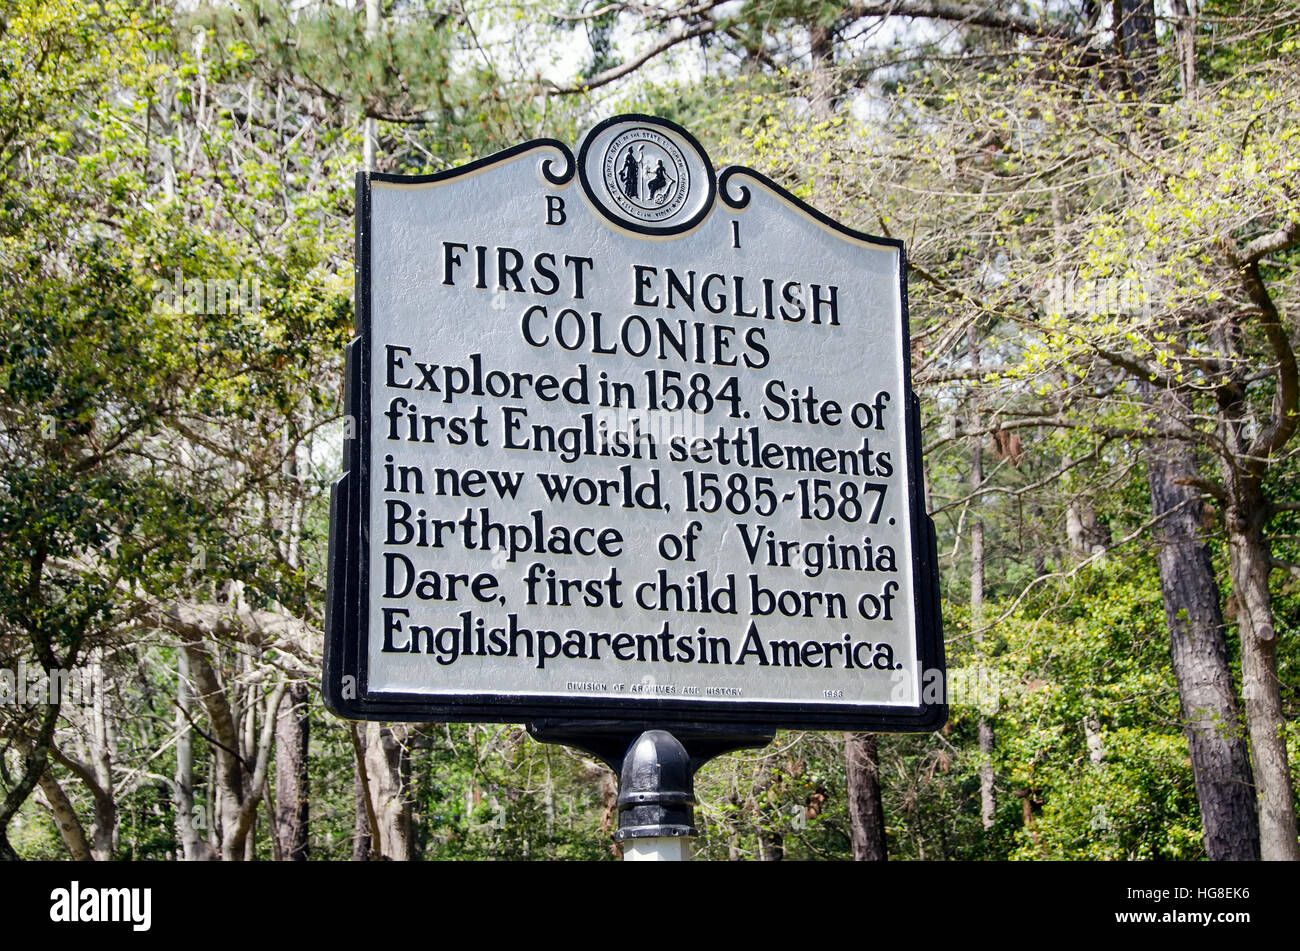 first-english-colonies-marker-sign-roanoke-island-north-carolina-stock-photo-alamy